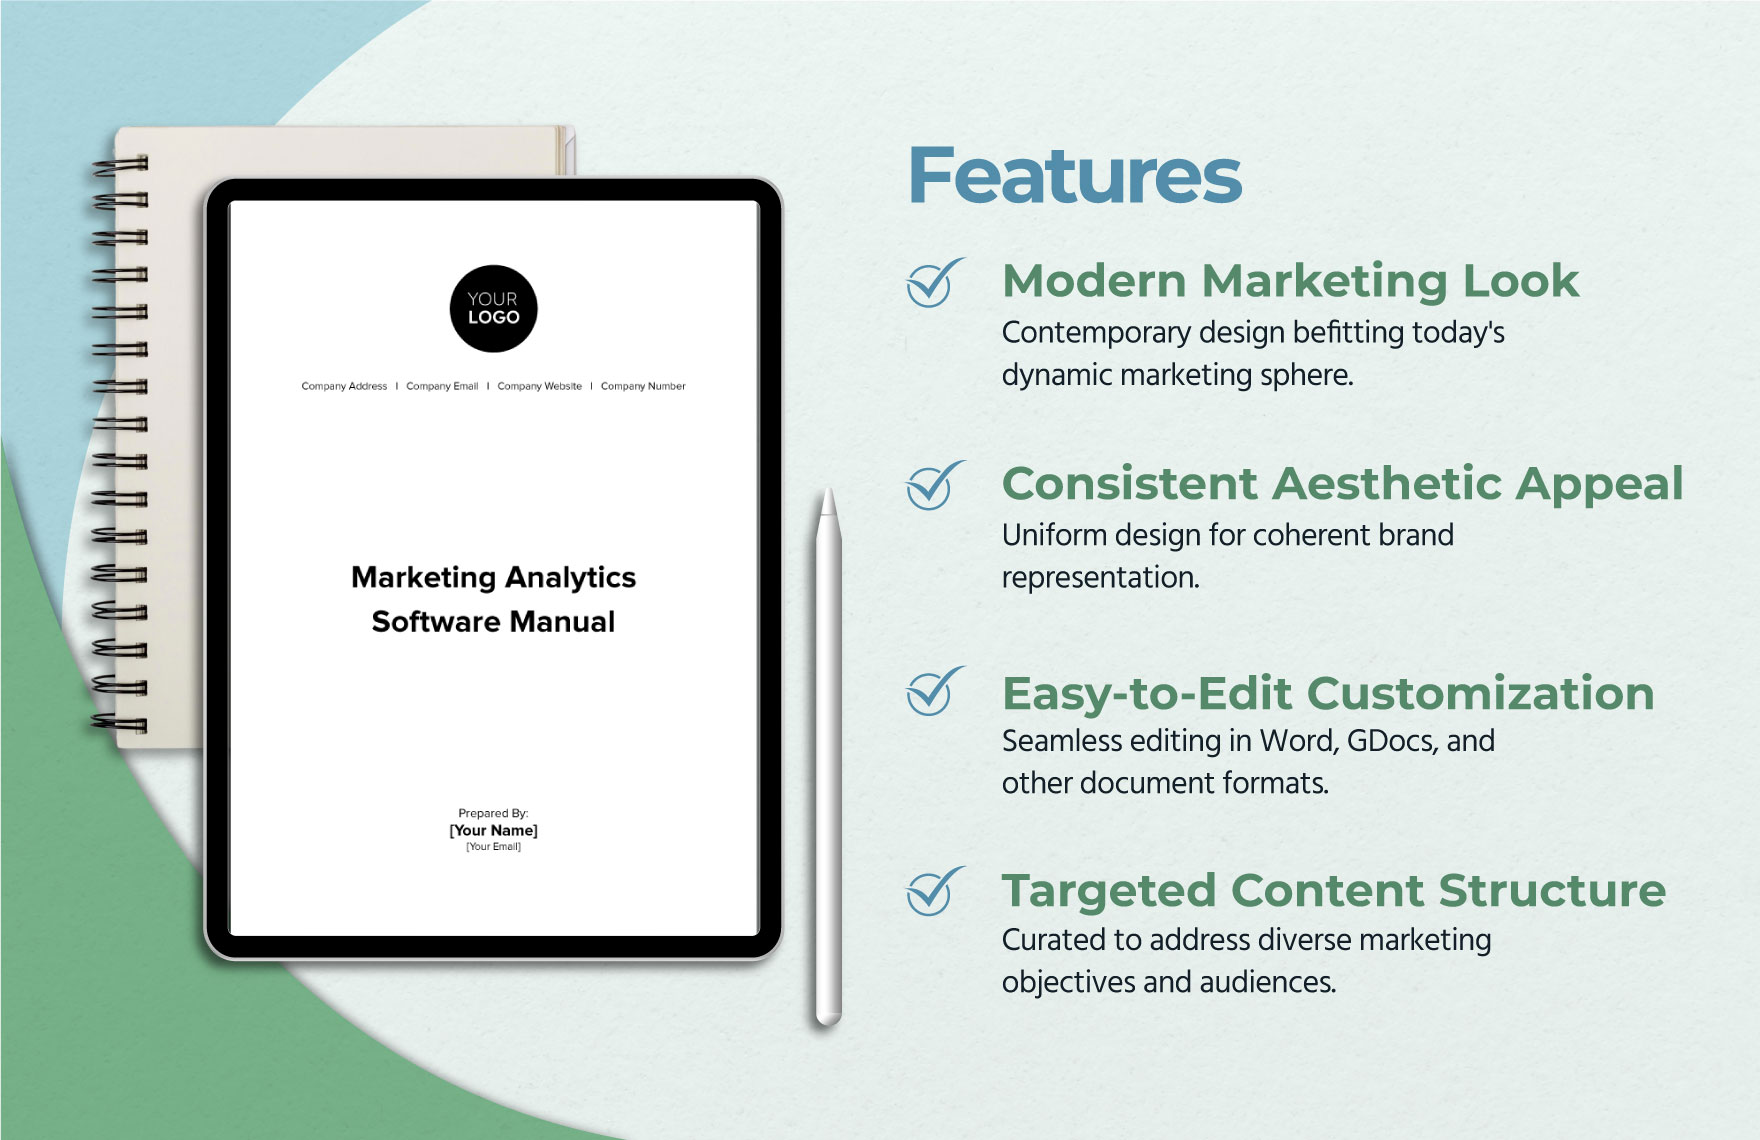 Marketing Analytics Software Manual Template